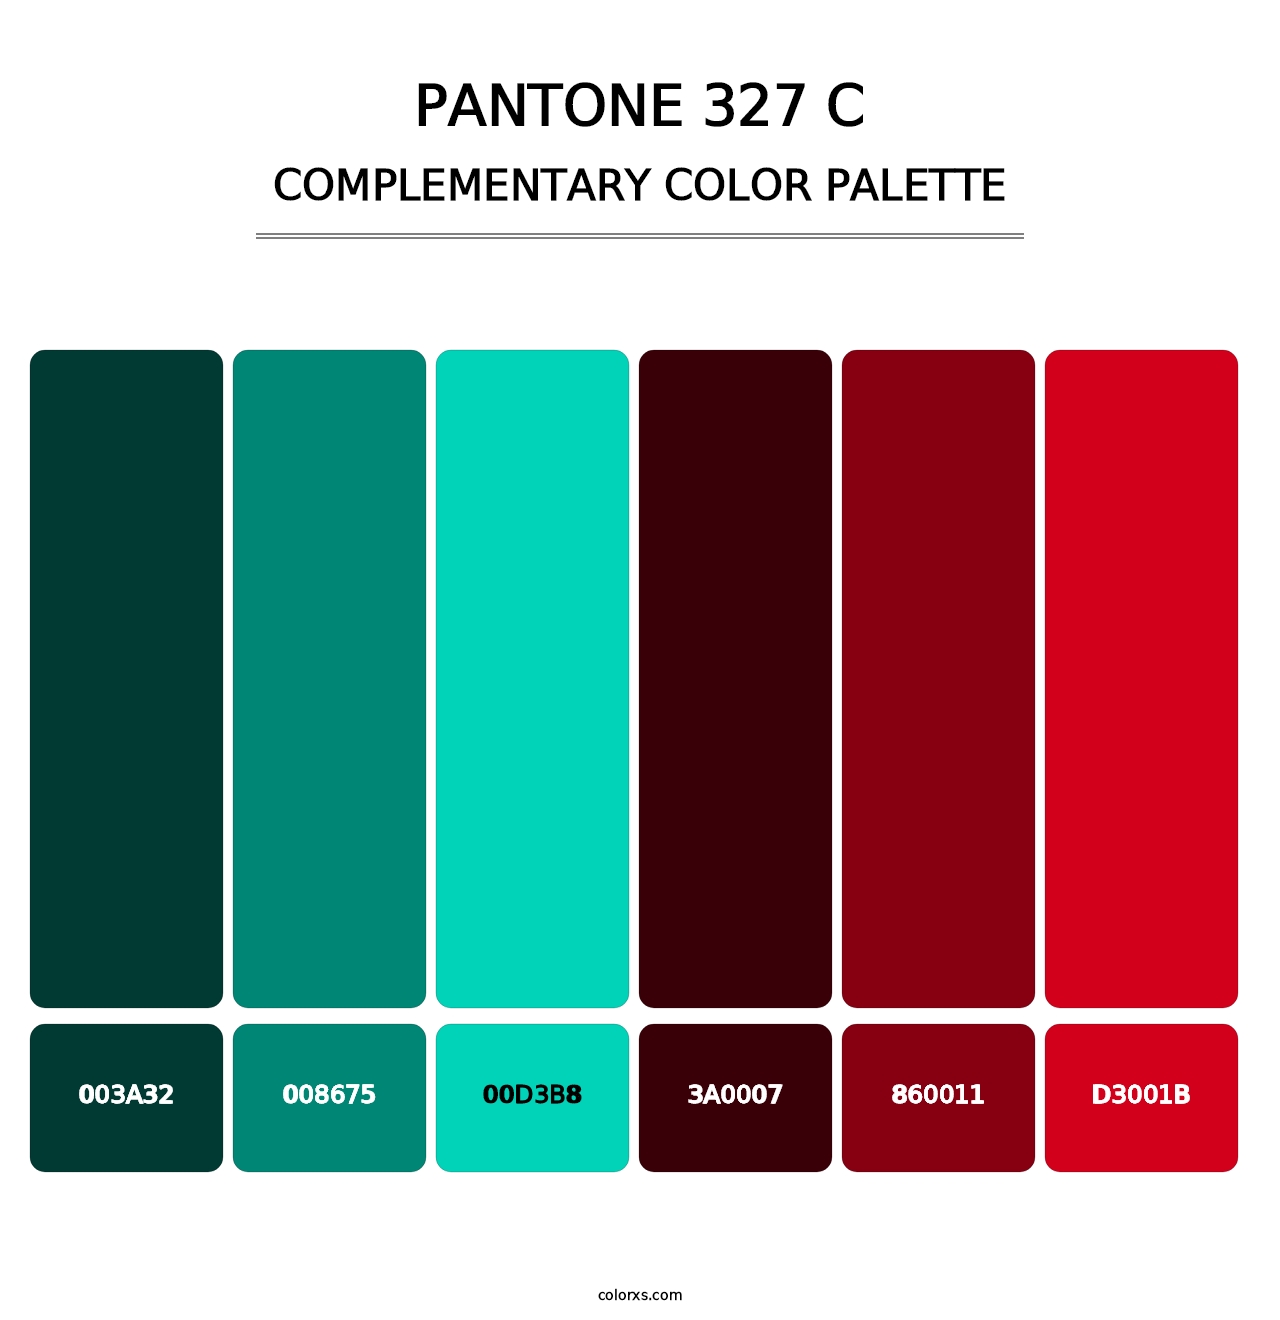 PANTONE 327 C - Complementary Color Palette